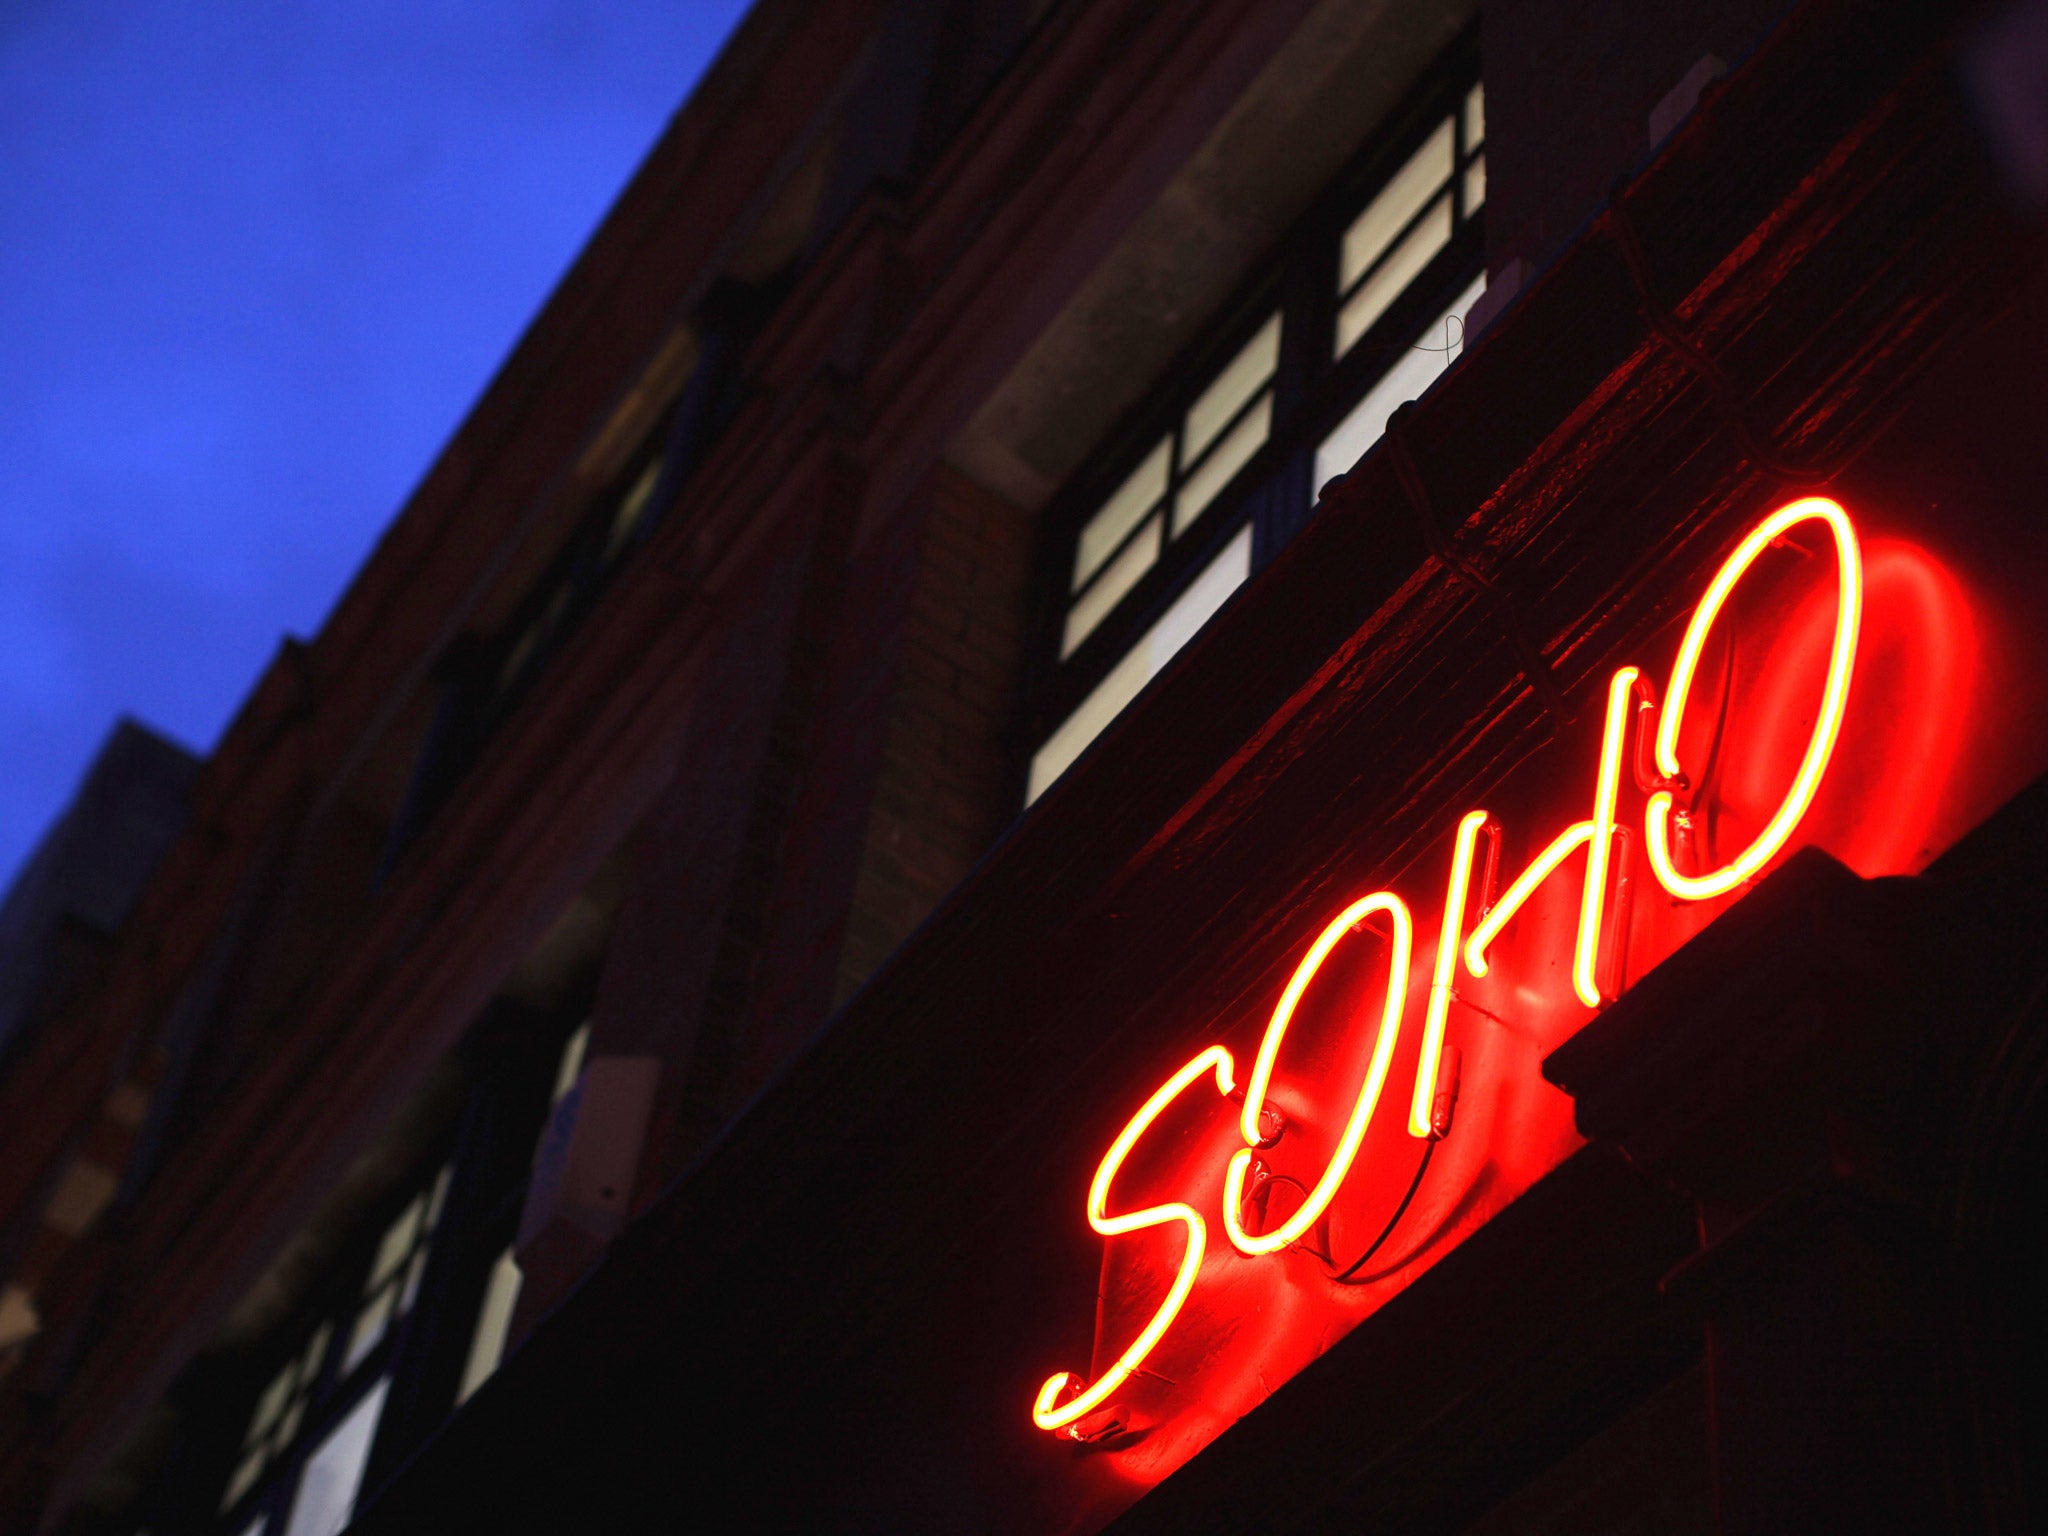 A red neon light illuminates a shop in Soho